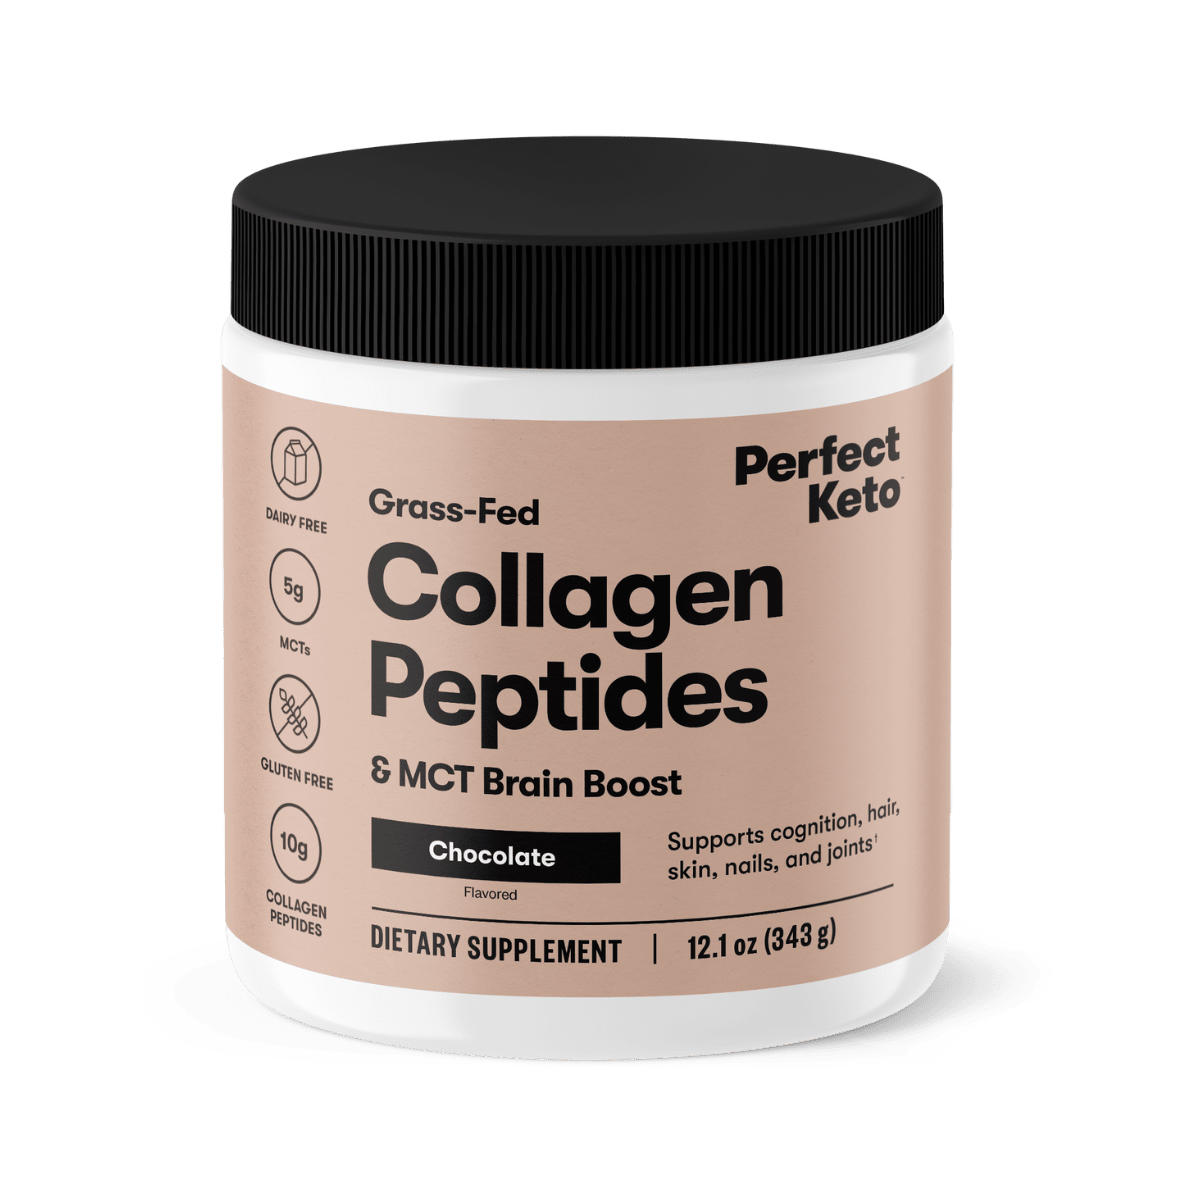 Grass-Fed Collagen Peptides & MCT Brain Boost (formerly Keto Collagen)